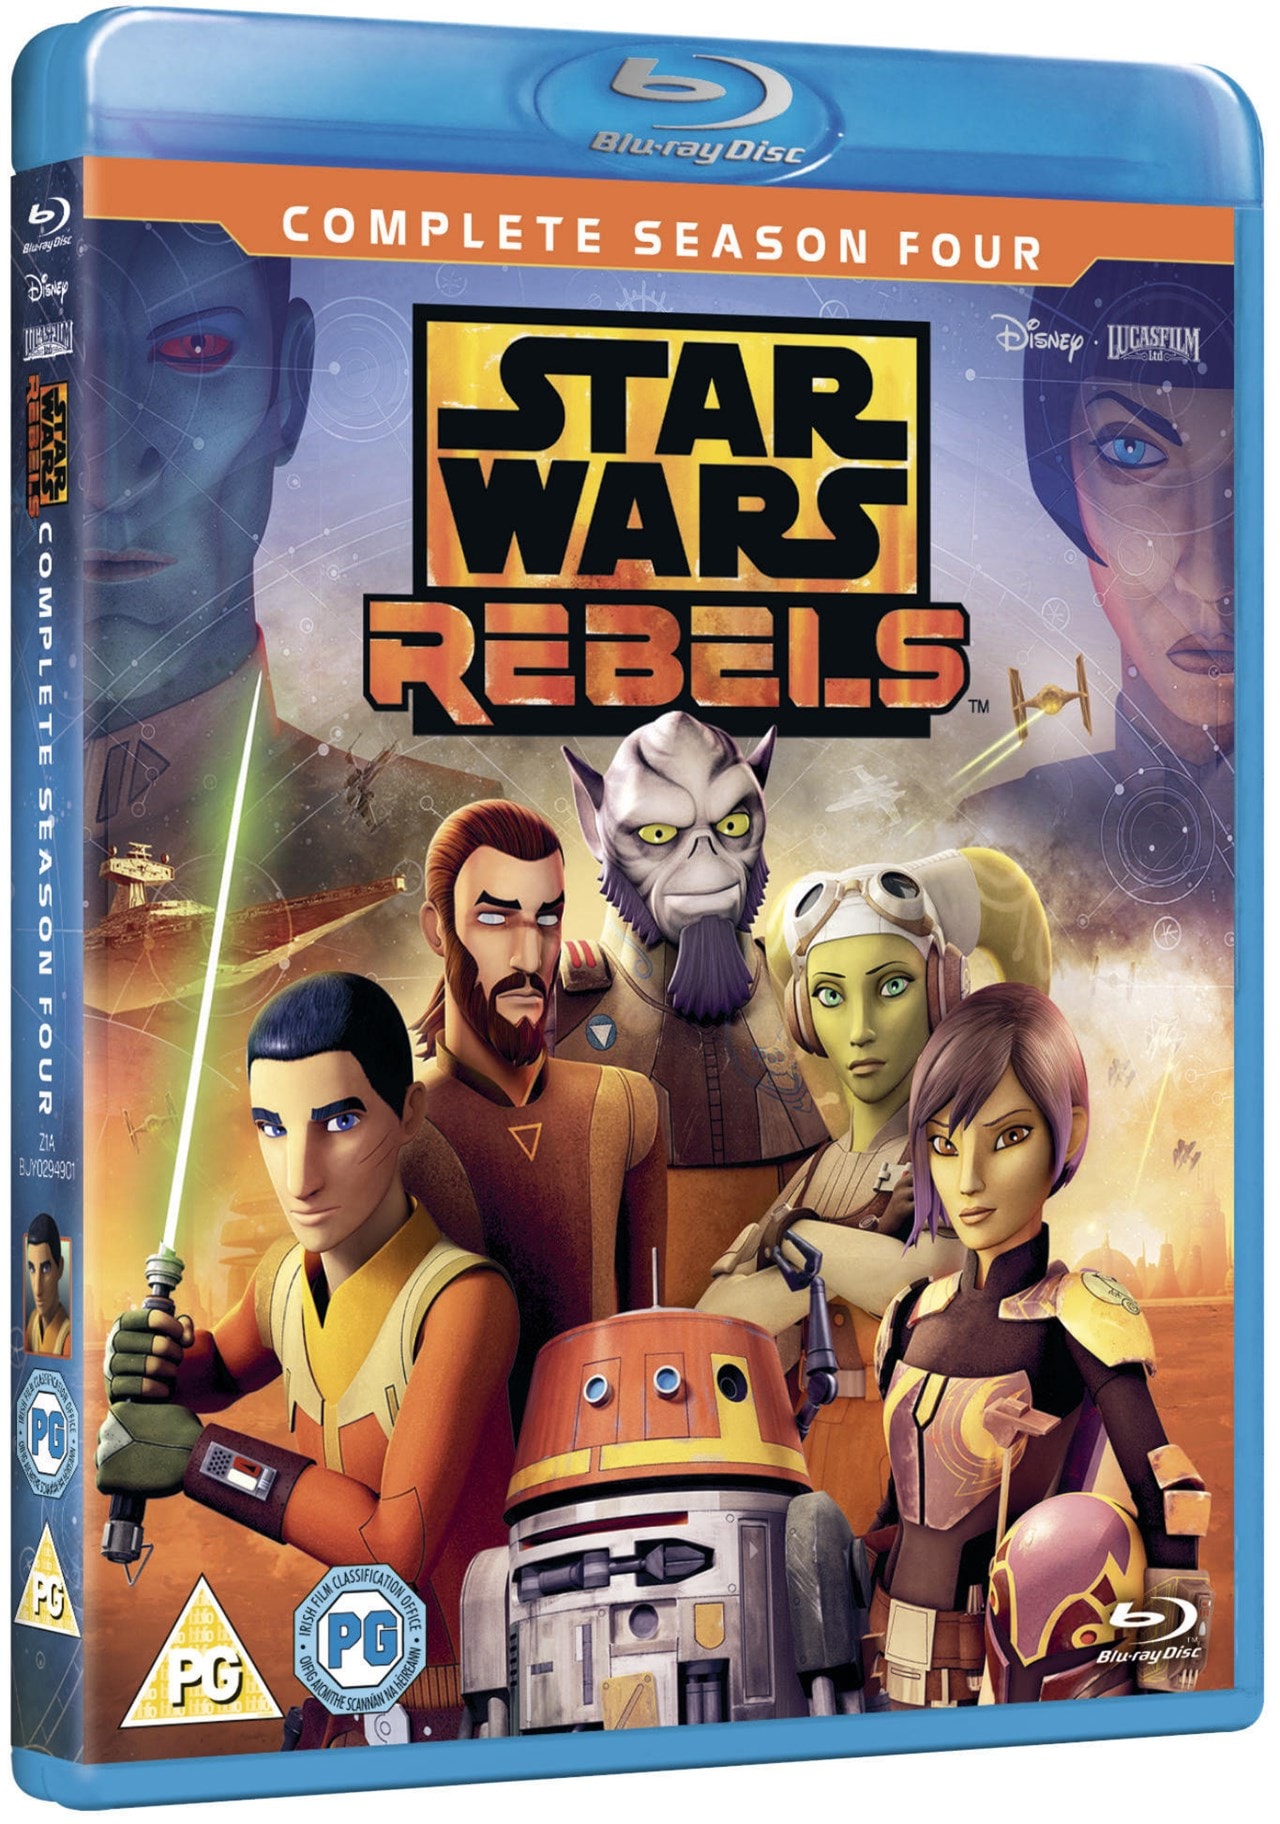 rebels blu ray box set